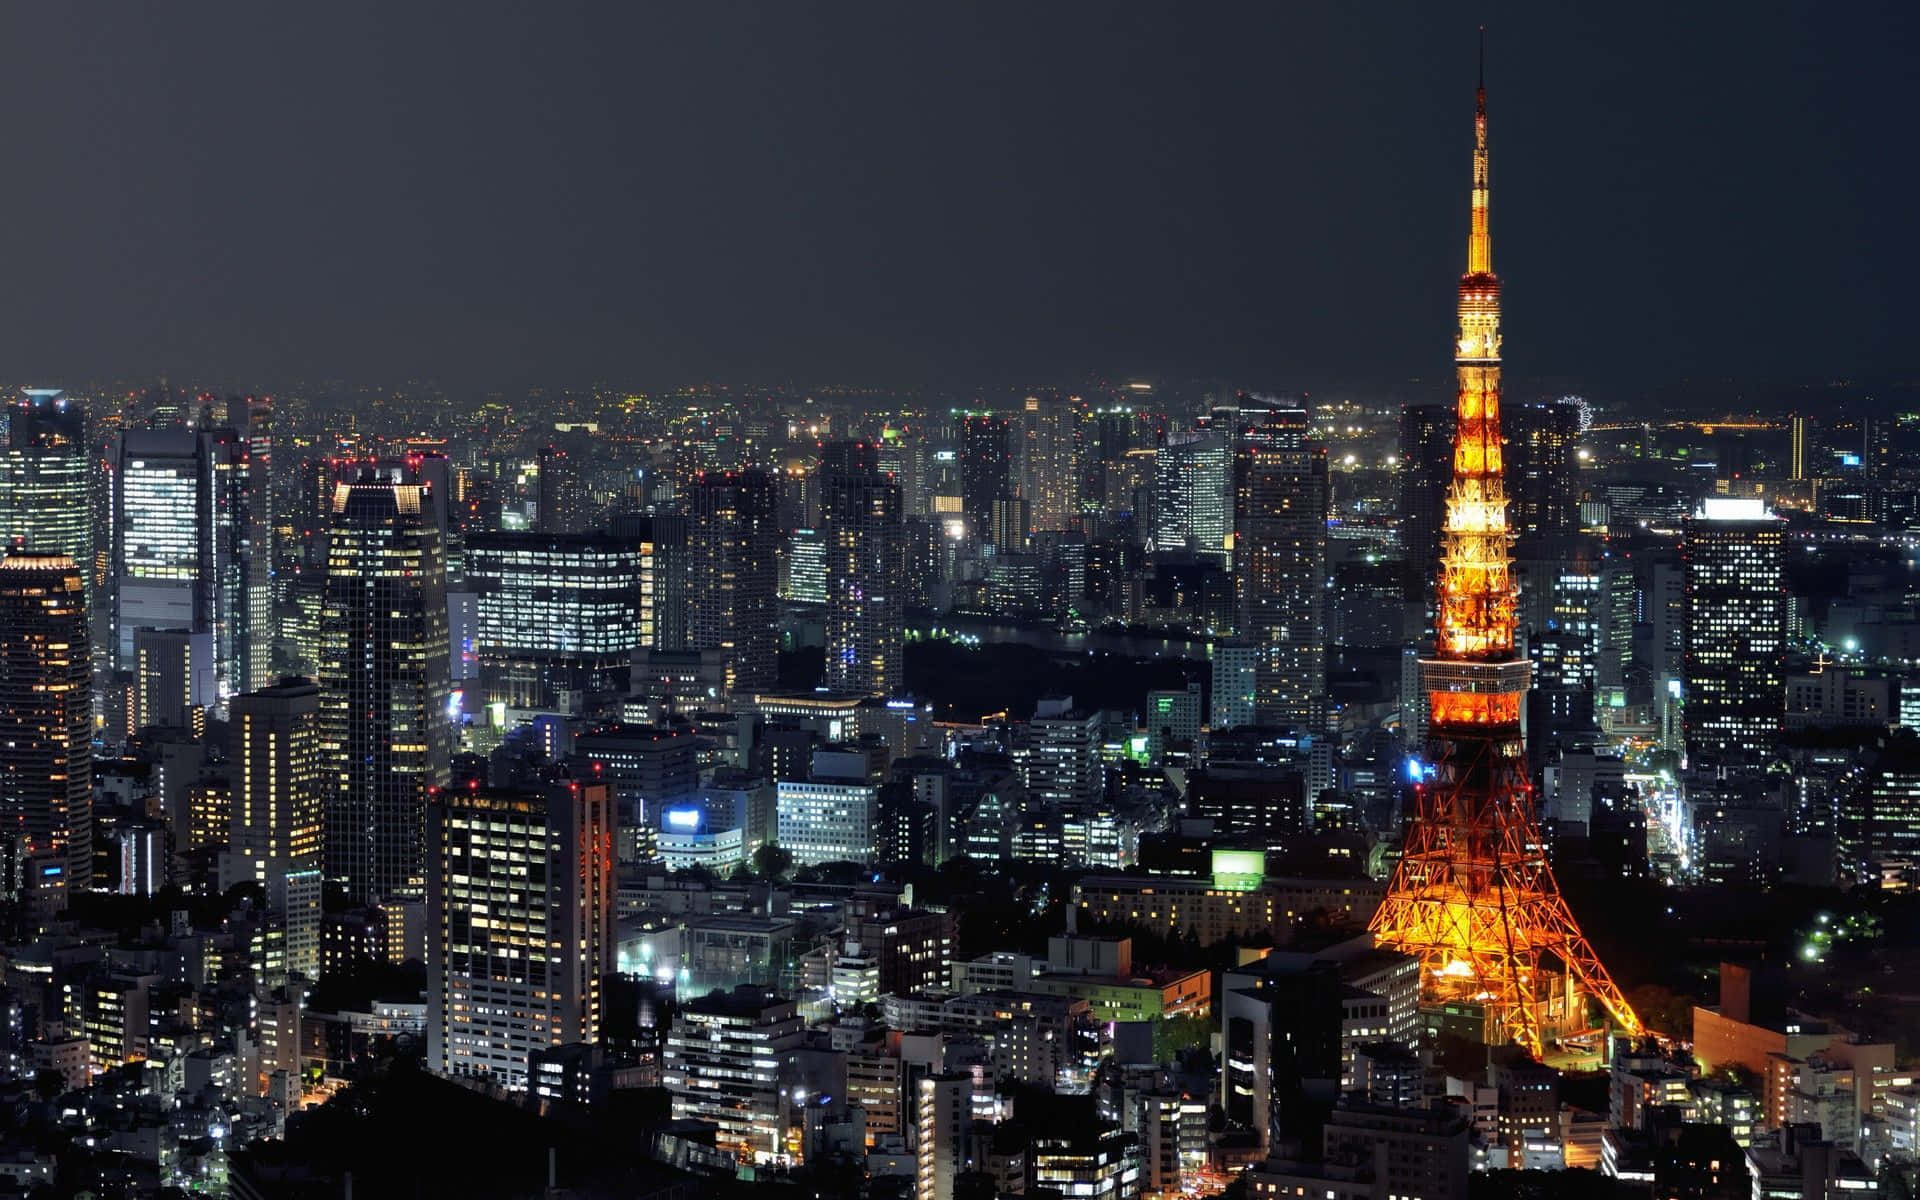 Fondode Pantalla De Tokio: La Torre De Tokio Brillantemente Iluminada.